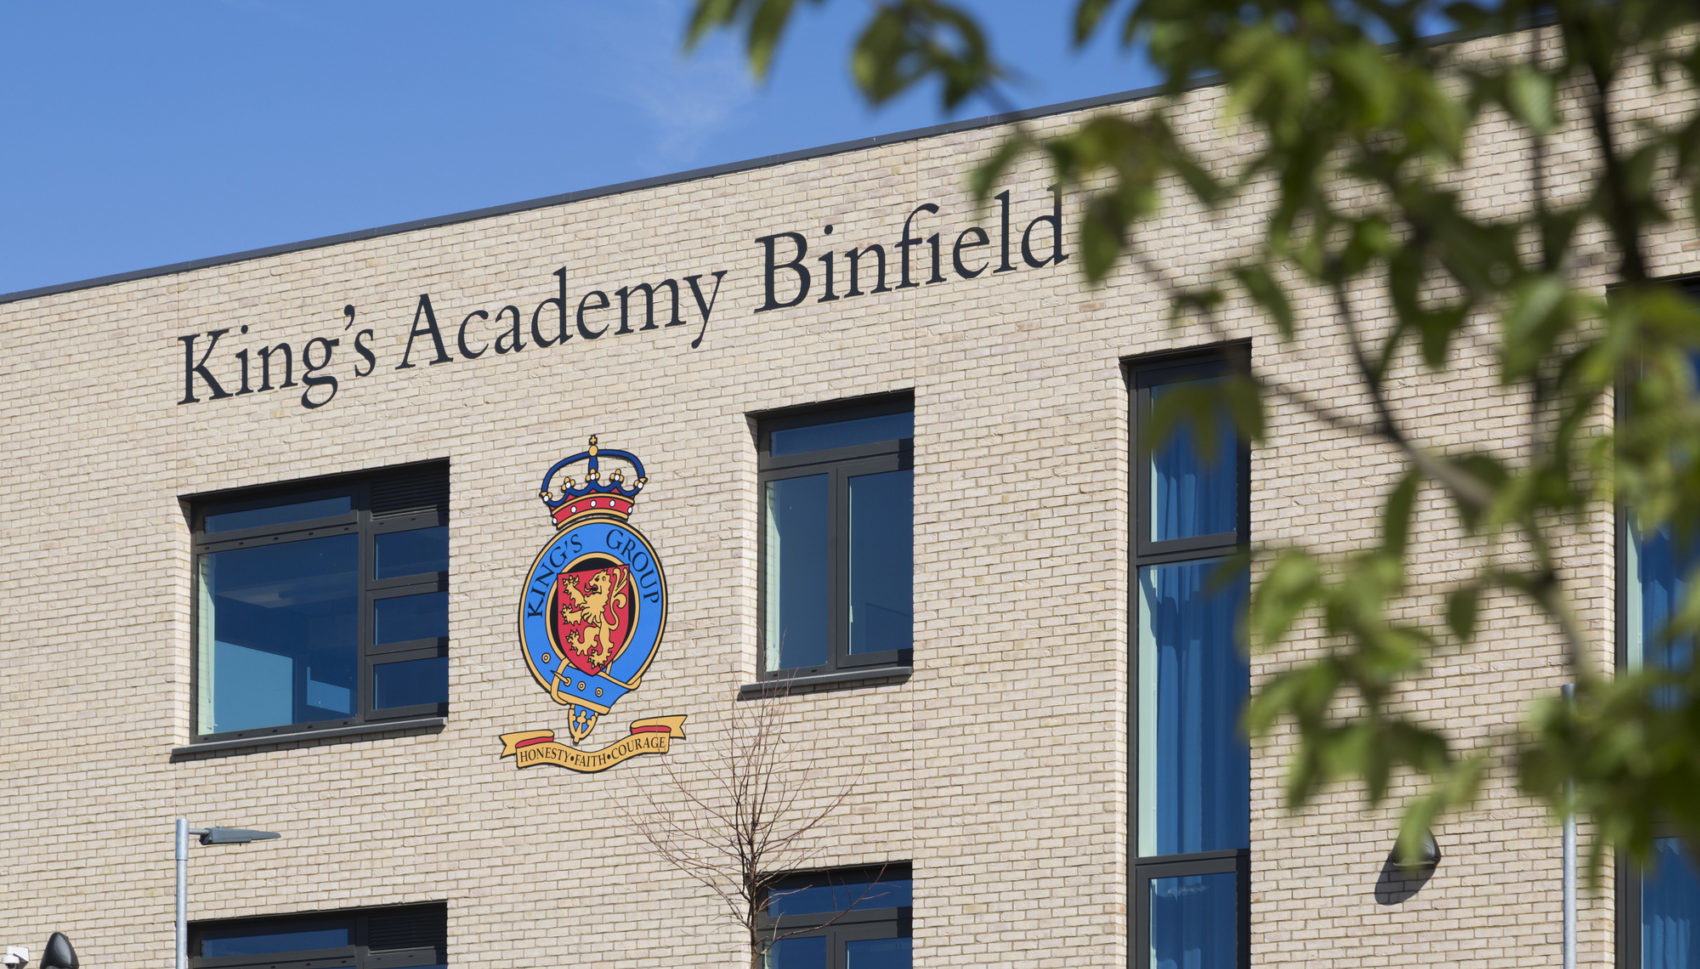 Kings Academy Binfield 